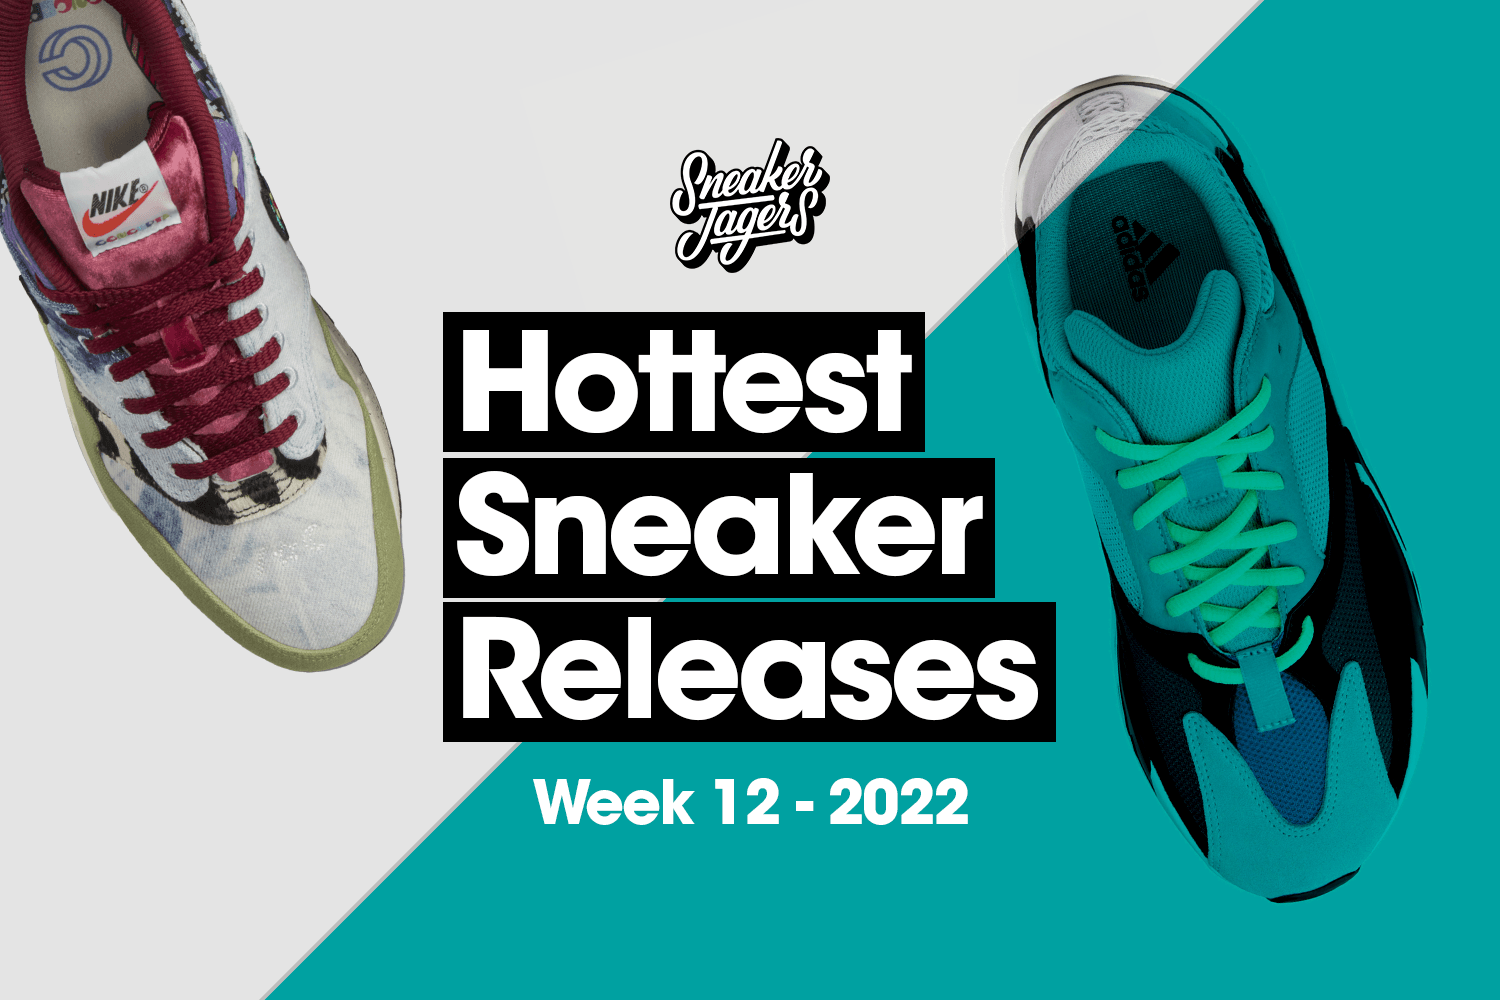 Hottest Sneaker Releases: Week 12